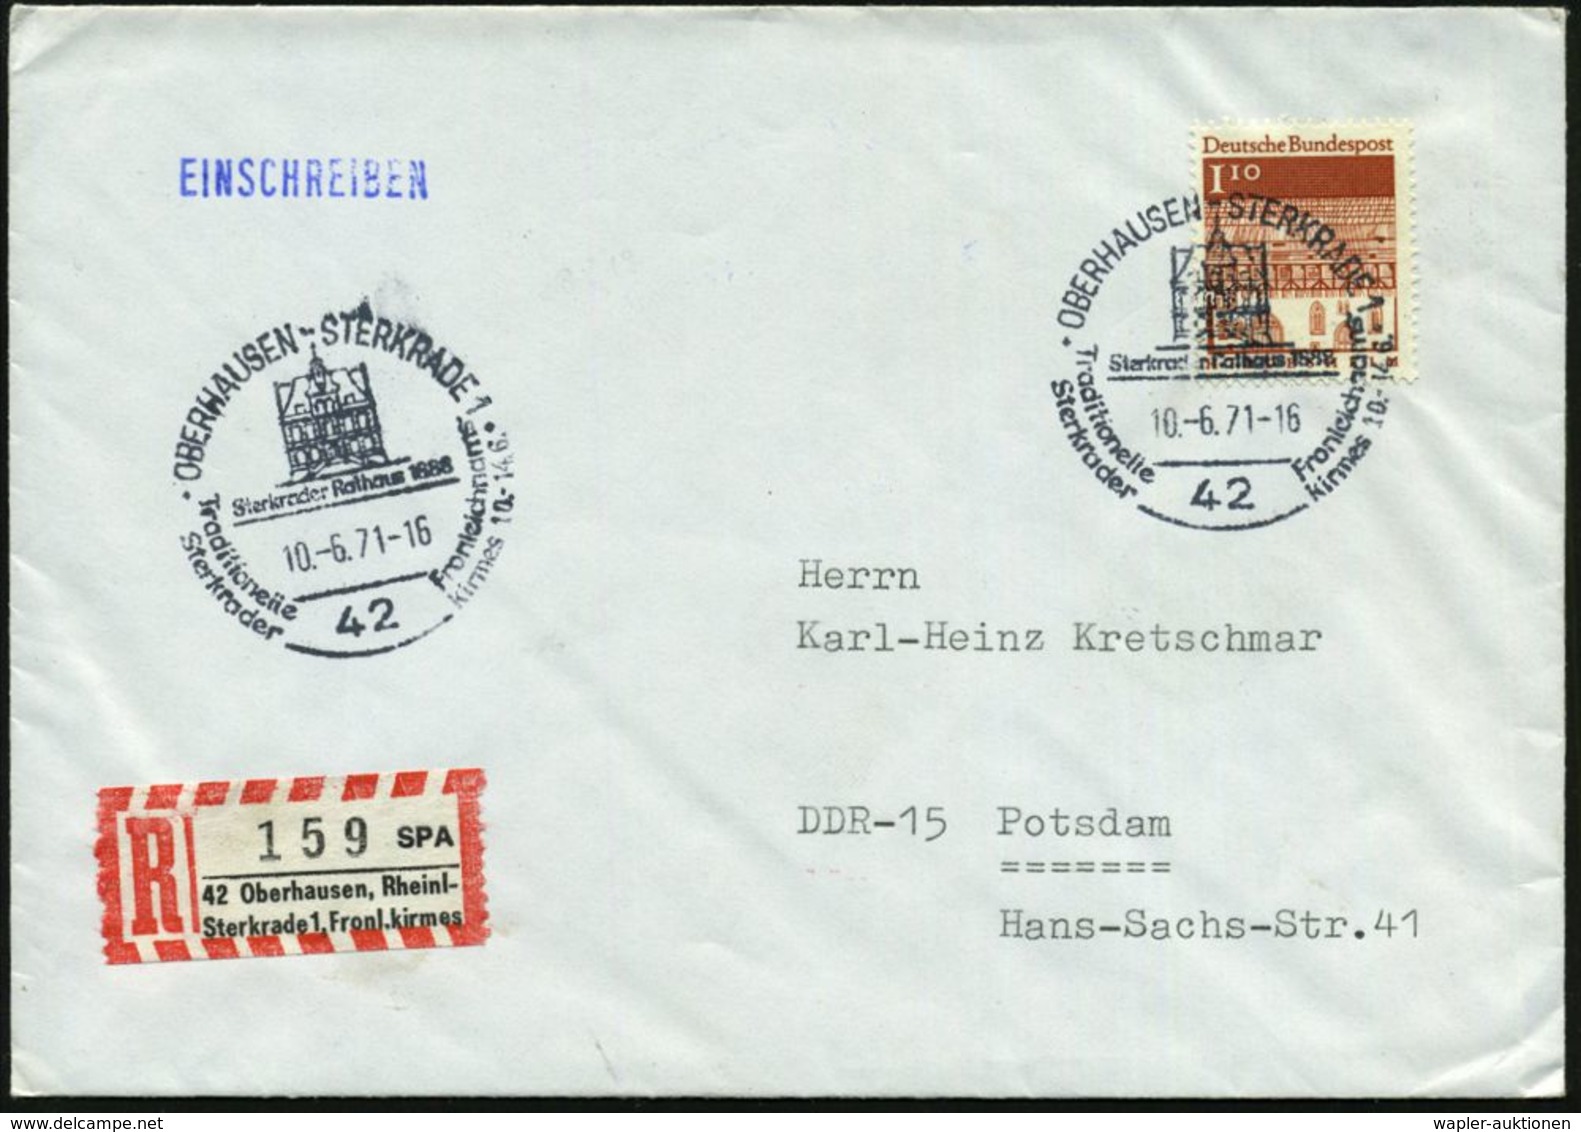 WALLFAHRT / PILGER : 42 OBERHAUSEN-STERKRADE 1/ Fronleichnams-/ Kirmes 1971 (10.6.) SSt + Sonder-RZ: SPA/42 Oberhausen,  - Christianisme